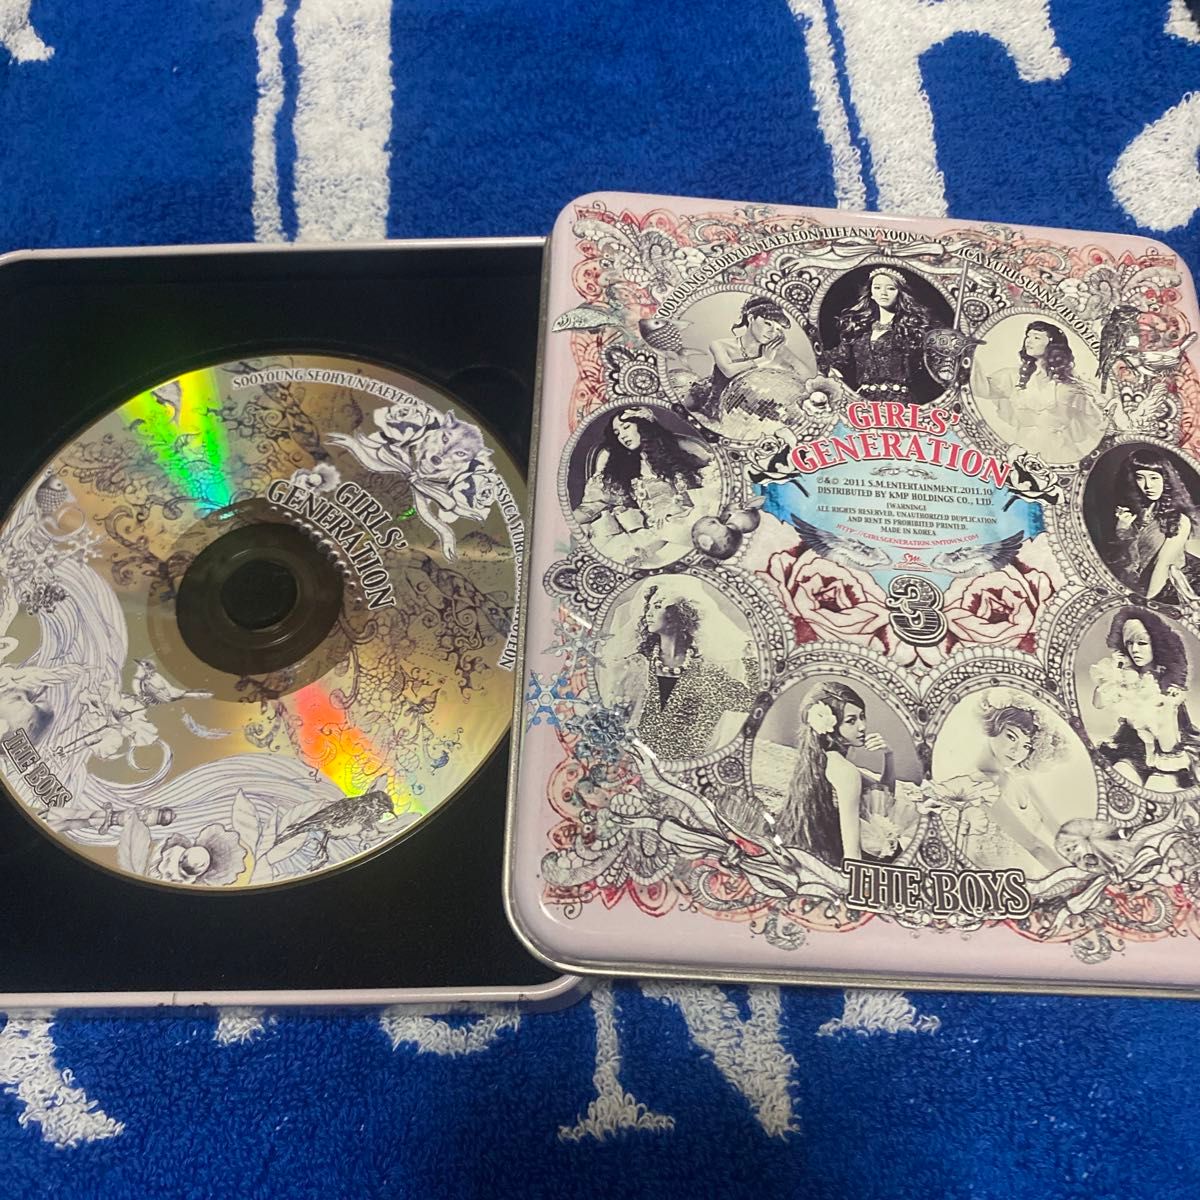 The Boys: Girls Generation Vol.3 CD+ブックレット+フォトカード CD 2セット 少女時代